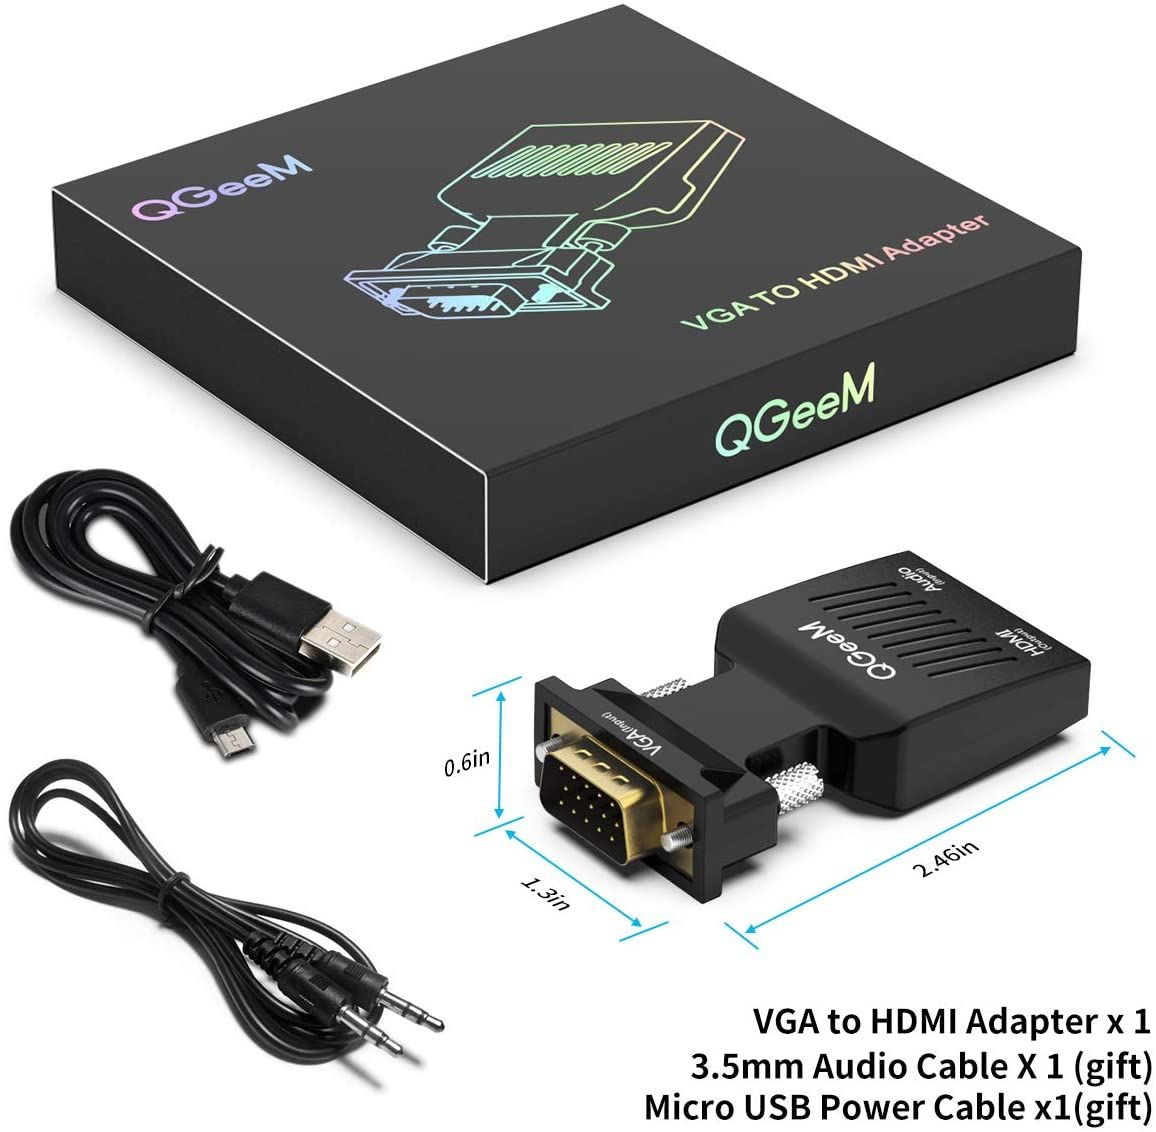 QGeeM VGA to HDMI Adapter cables